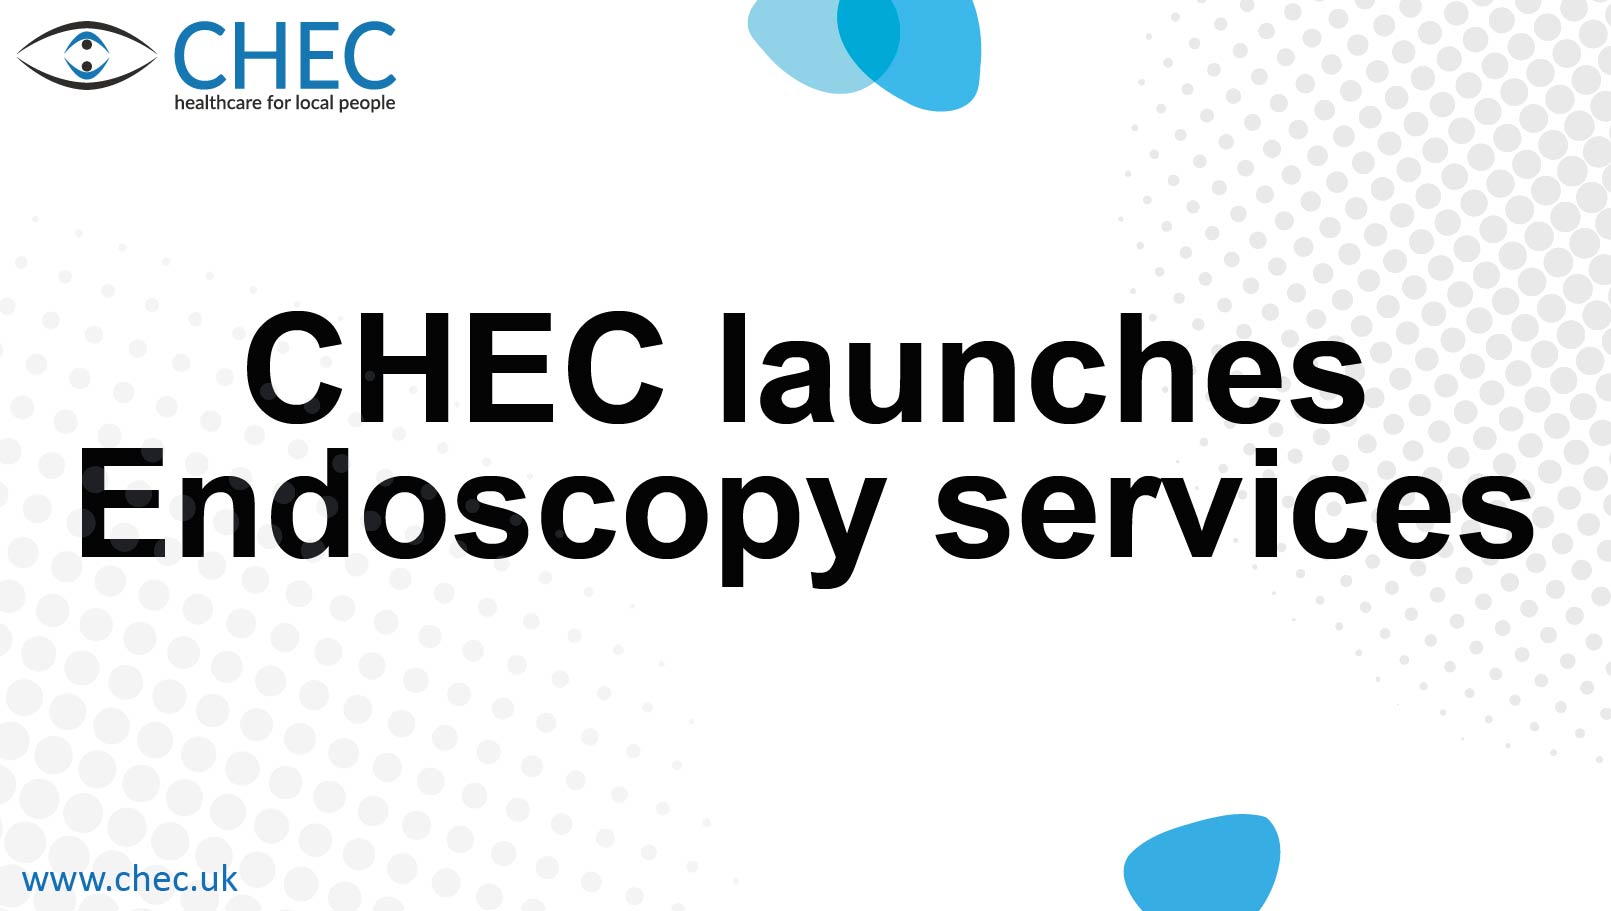 chec launches endoscopy services